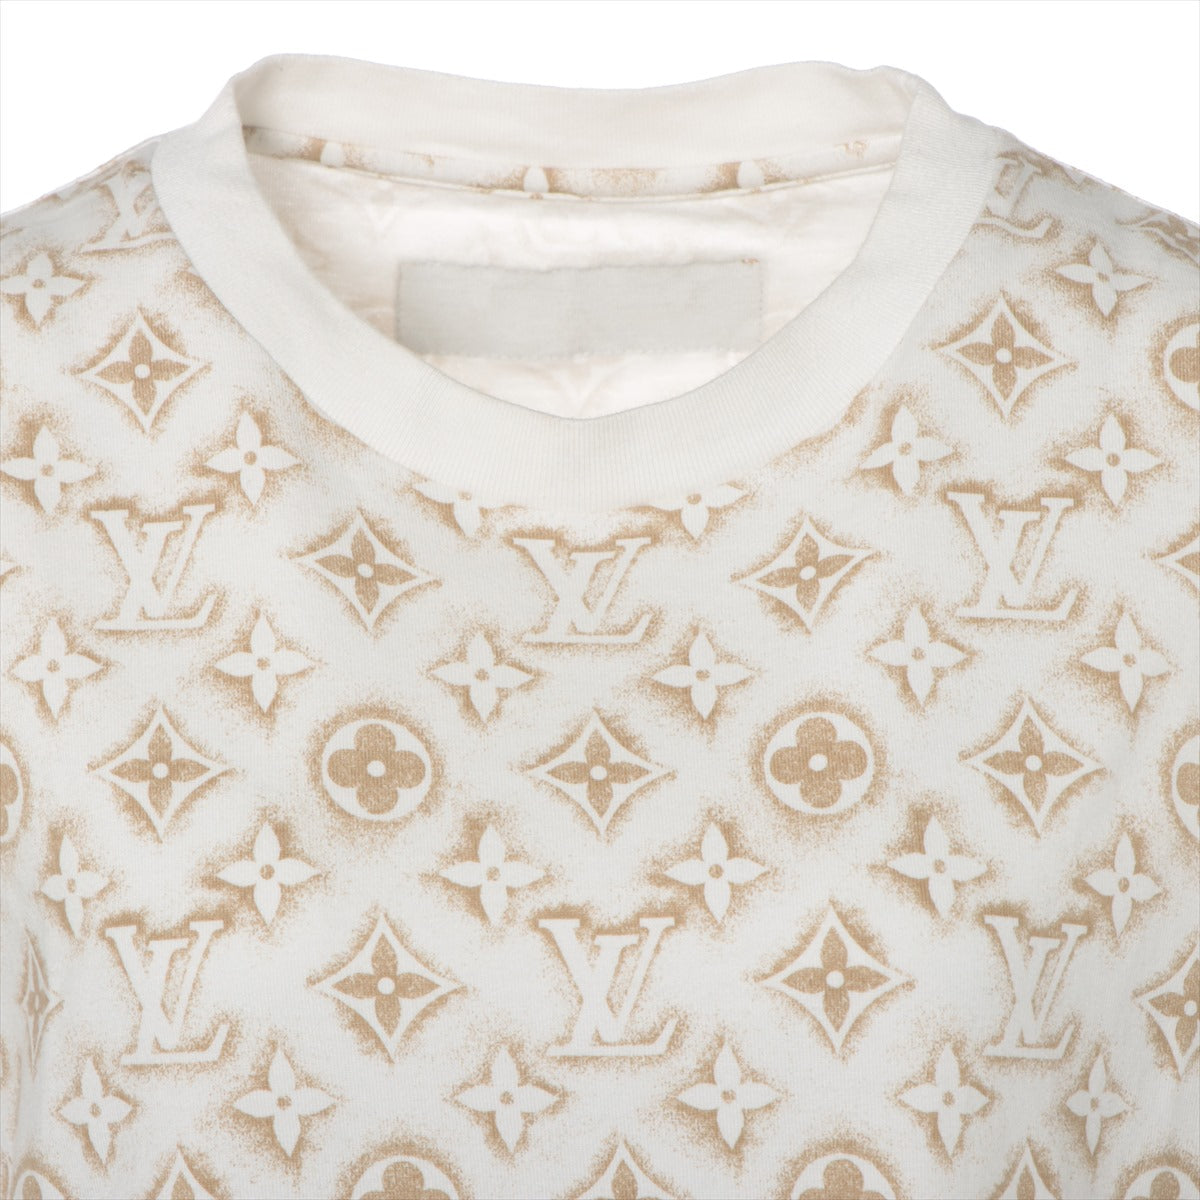 Louis Vuitton 23AW Cotton T-shirt M Men's White  Monogram RM232